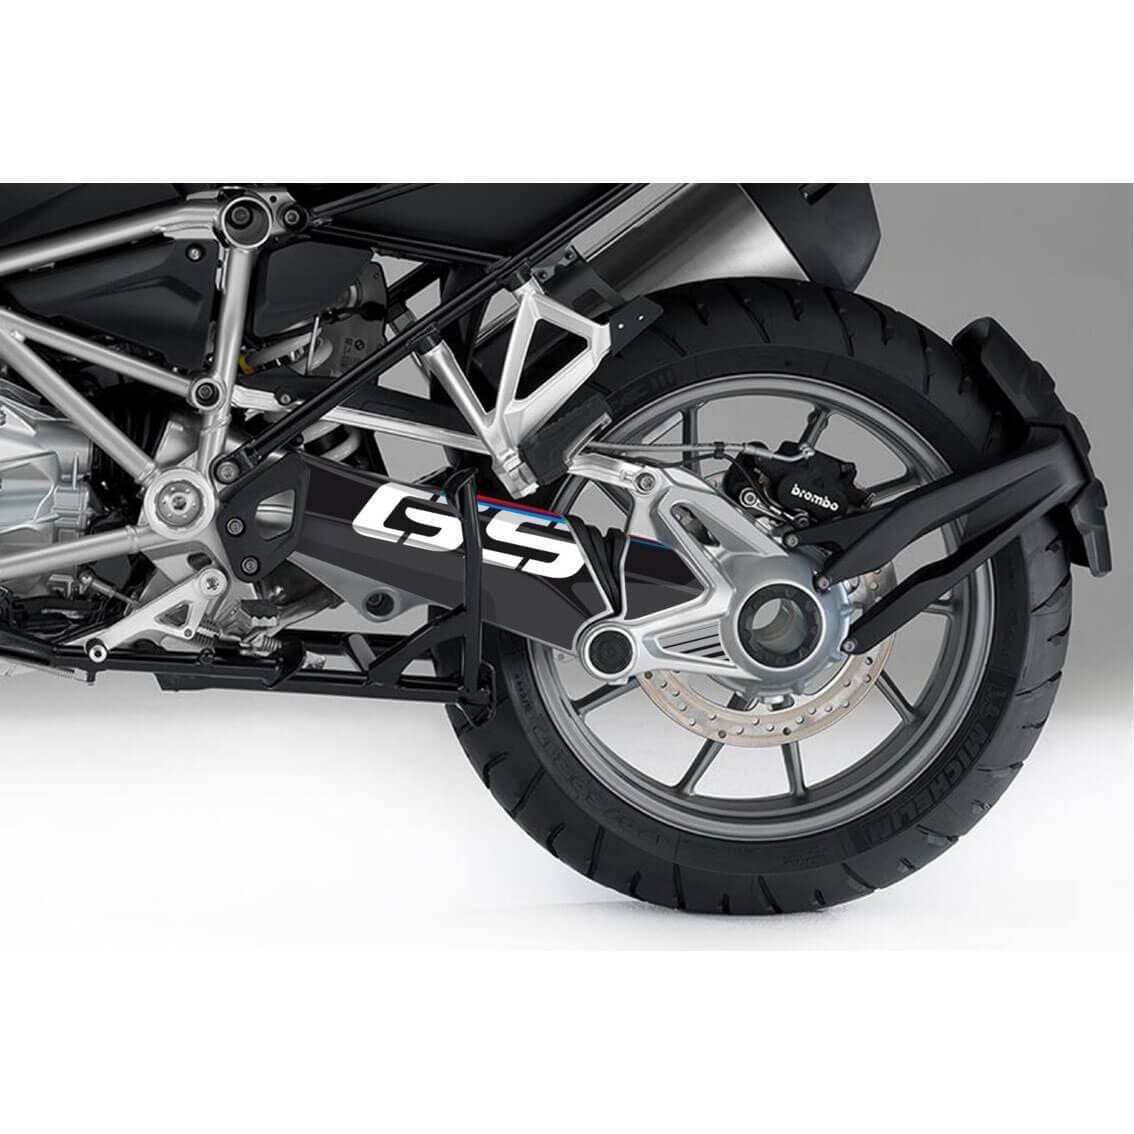 Puig Swing Arm Protectors | Black | BMW R1200 GS 2013>2018-M20153N-Swing Arm Protectors-Pyramid Motorcycle Accessories